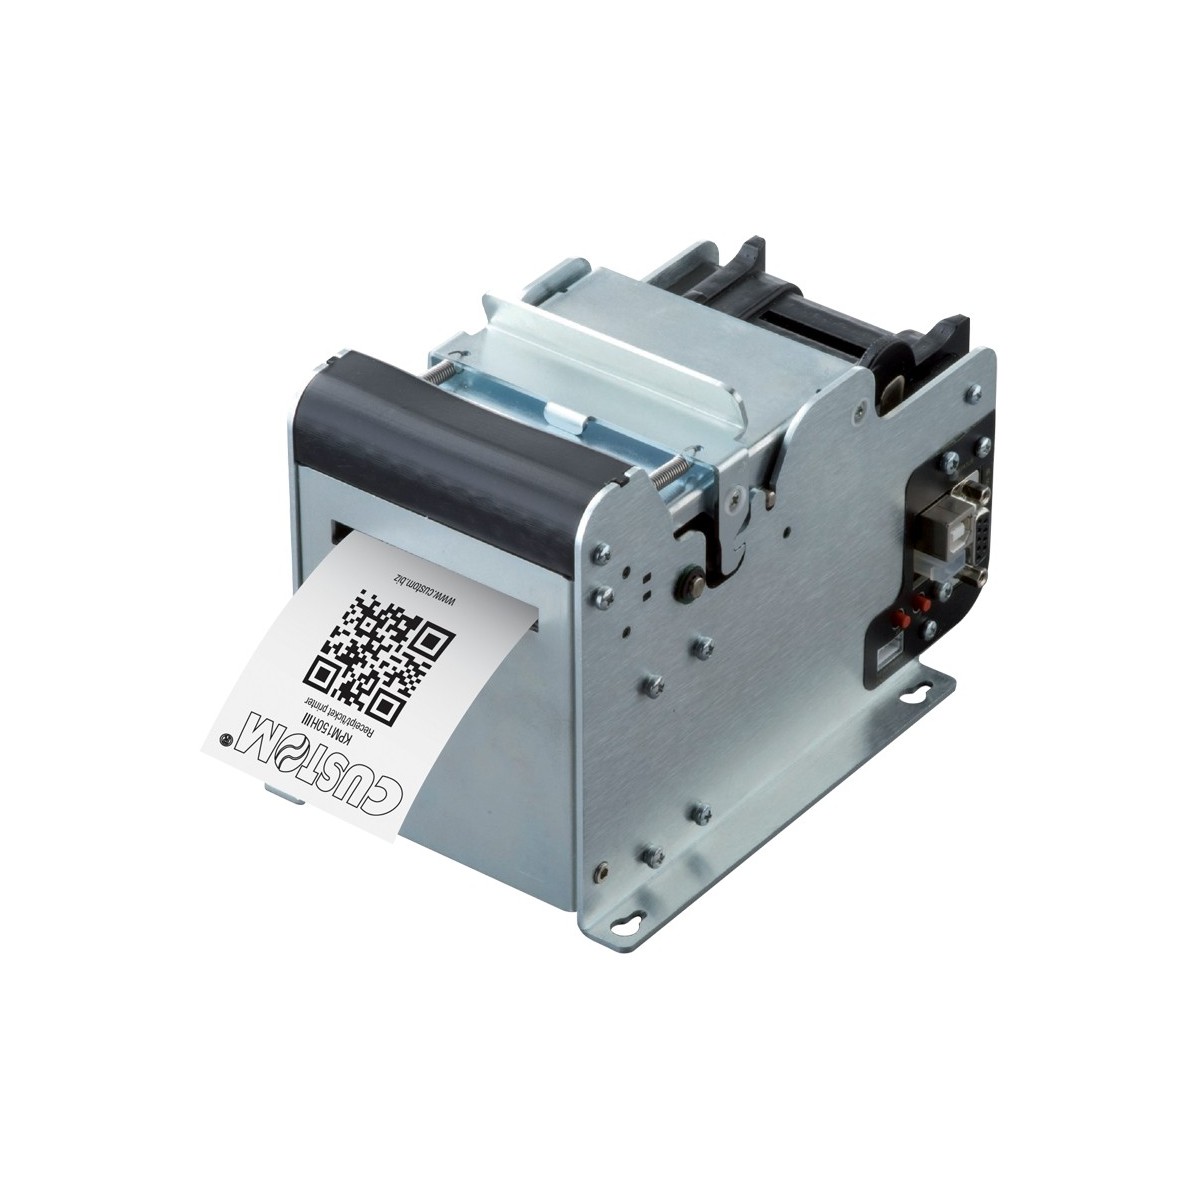 Custom KPM150HIII - Thermal - POS printer - 203 x 203 DPI - 180 mm-sec - PC437,PC850,PC860,PC863,PC865 - 54 mm